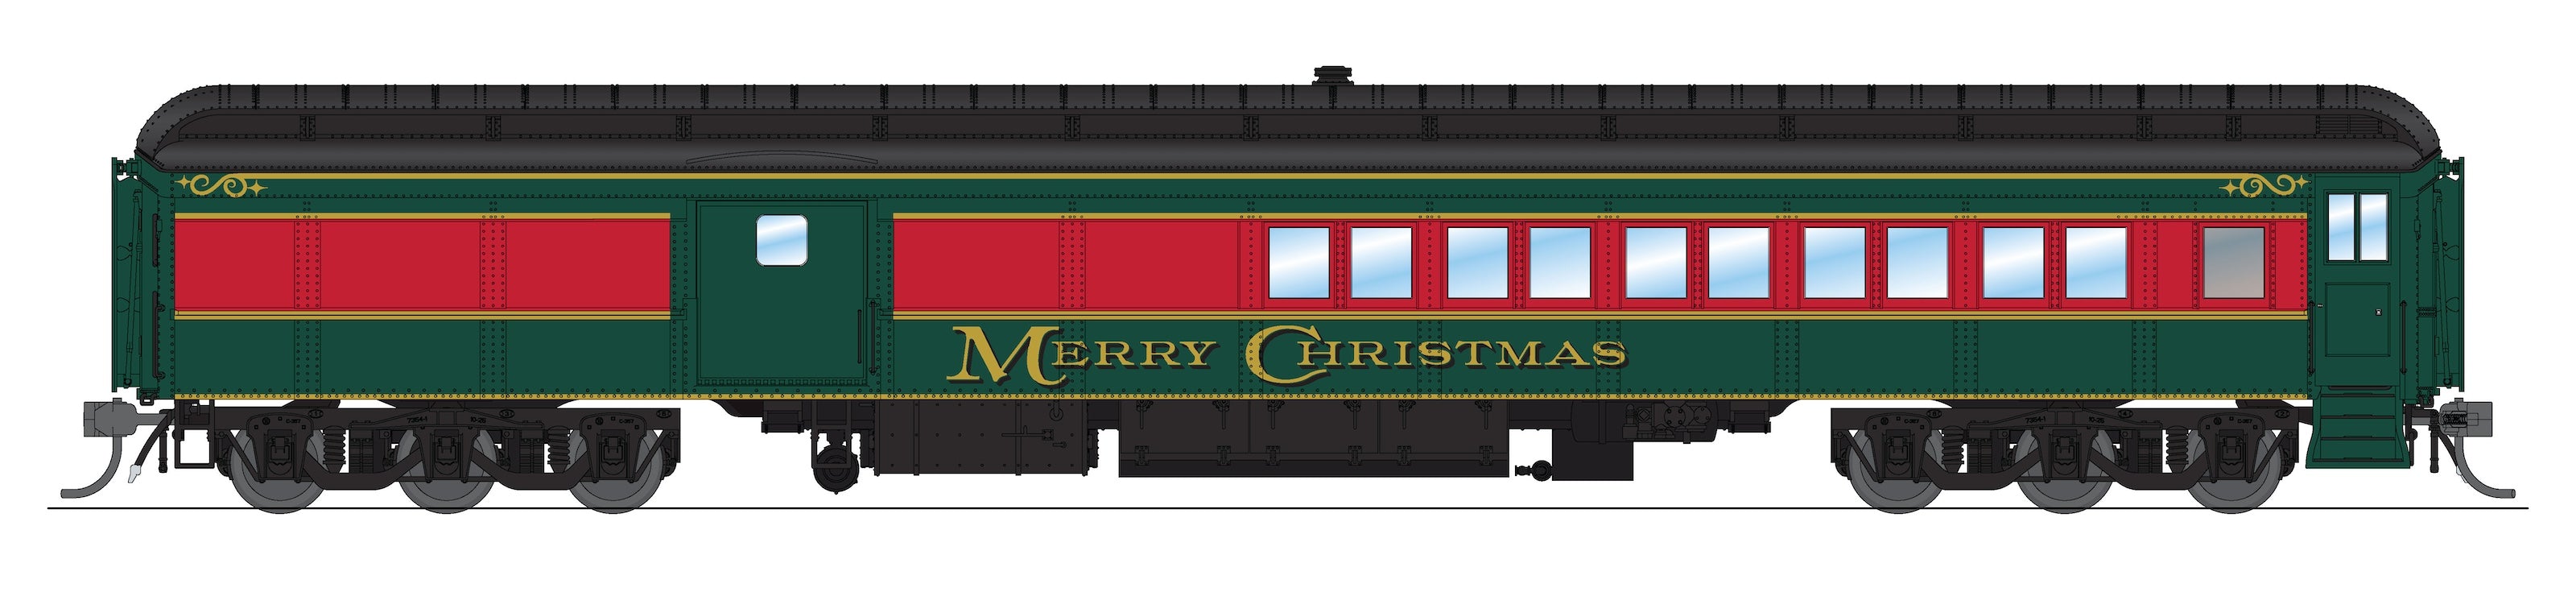 9103 Heavyweight 5-Car Passenger Set, Christmas Paint Scheme, HO Scale